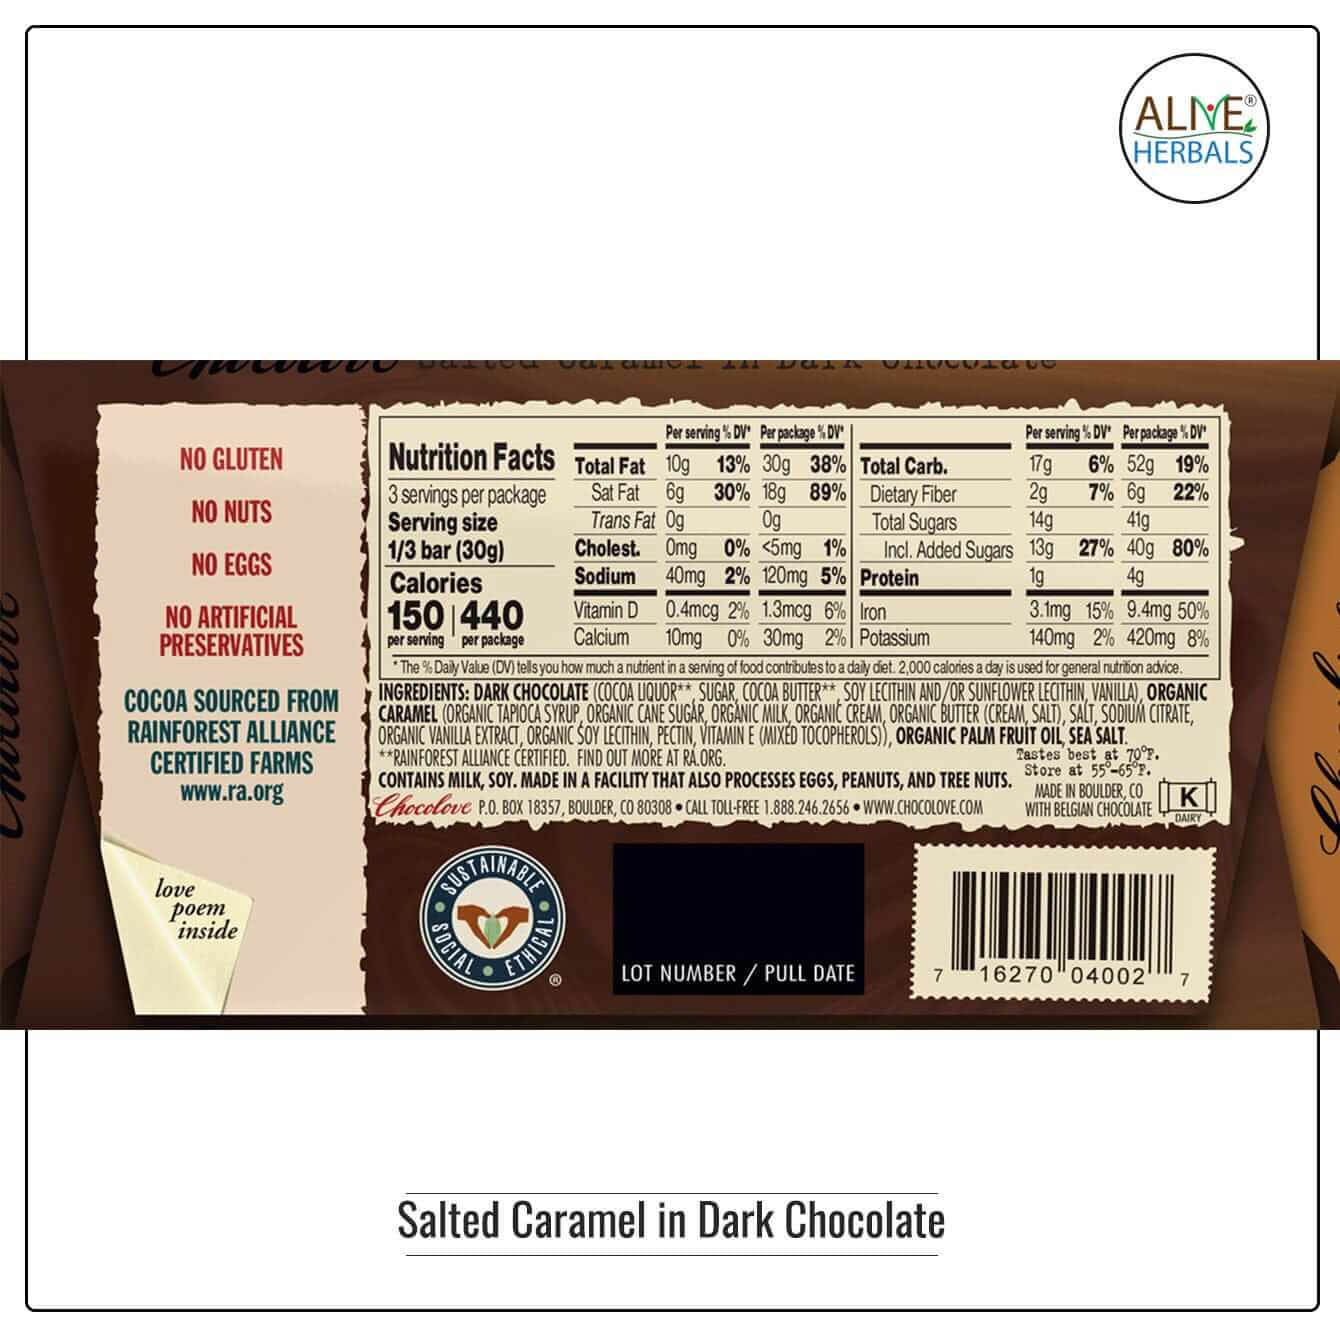 Salted Caramel in Dark Chocolate - Buy at Natural Food Store | Alive Herbals.